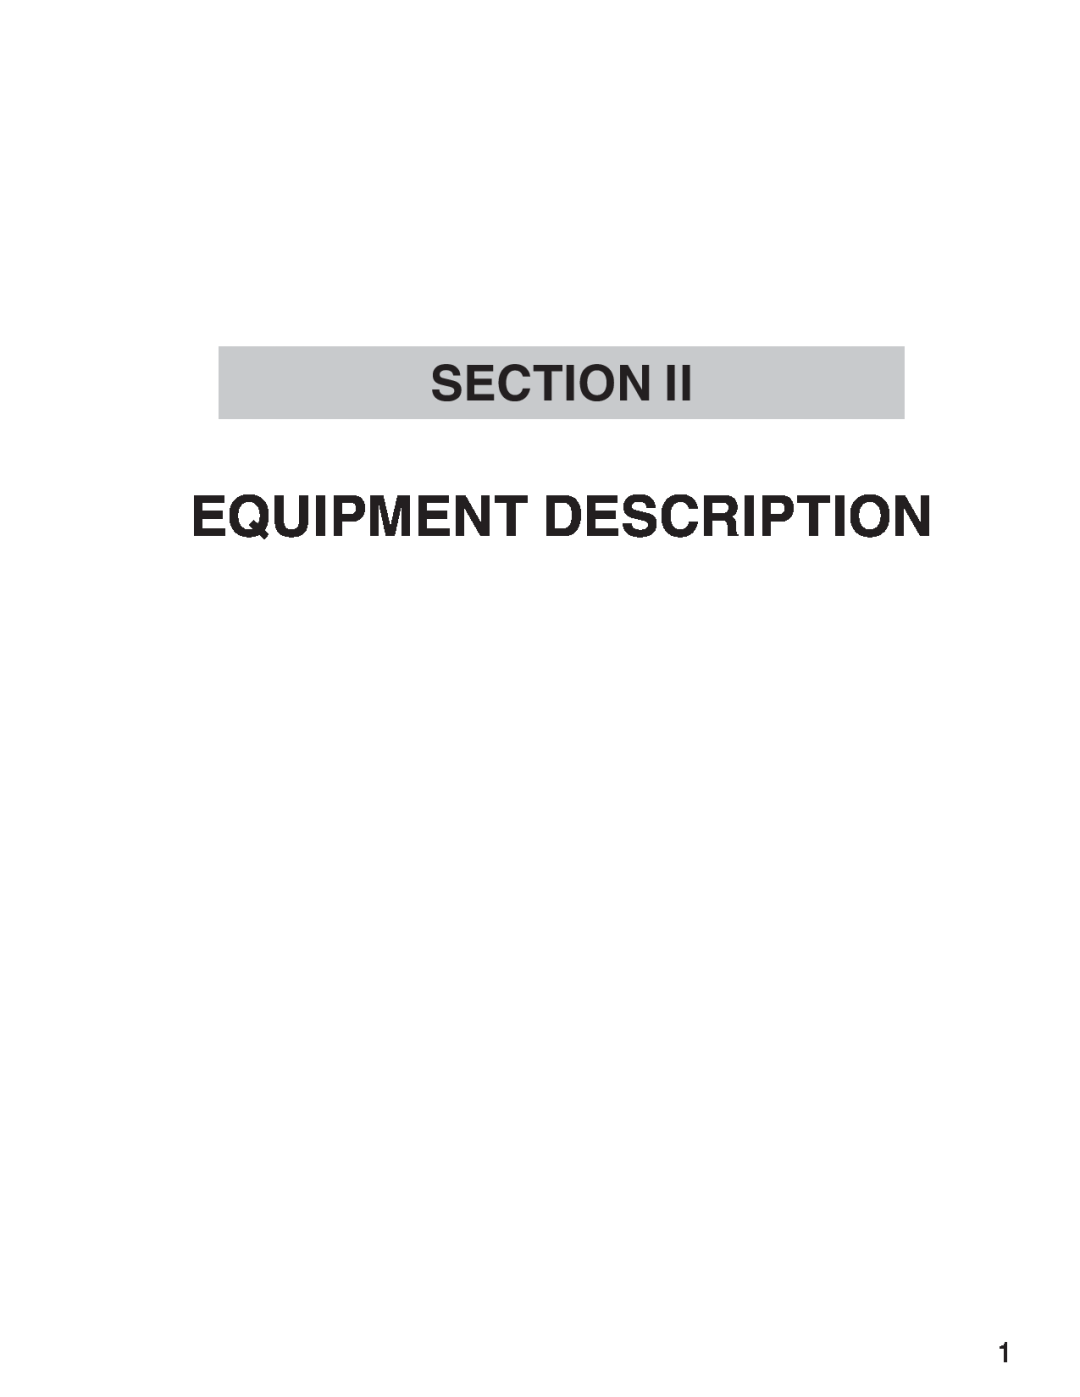 ATN 3 manual EQUIPMENT Description, Section 